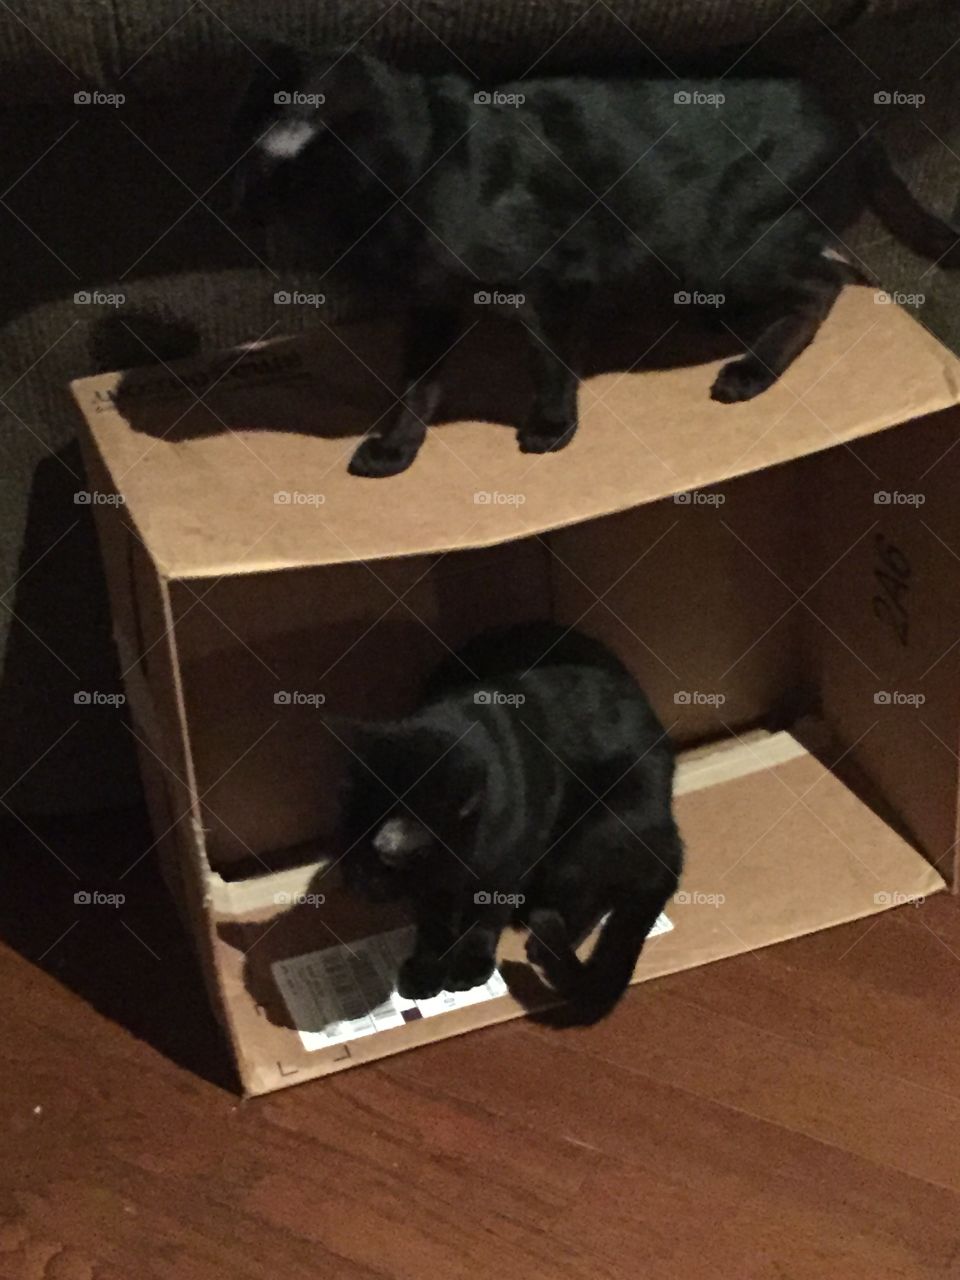 Kitties love boxes